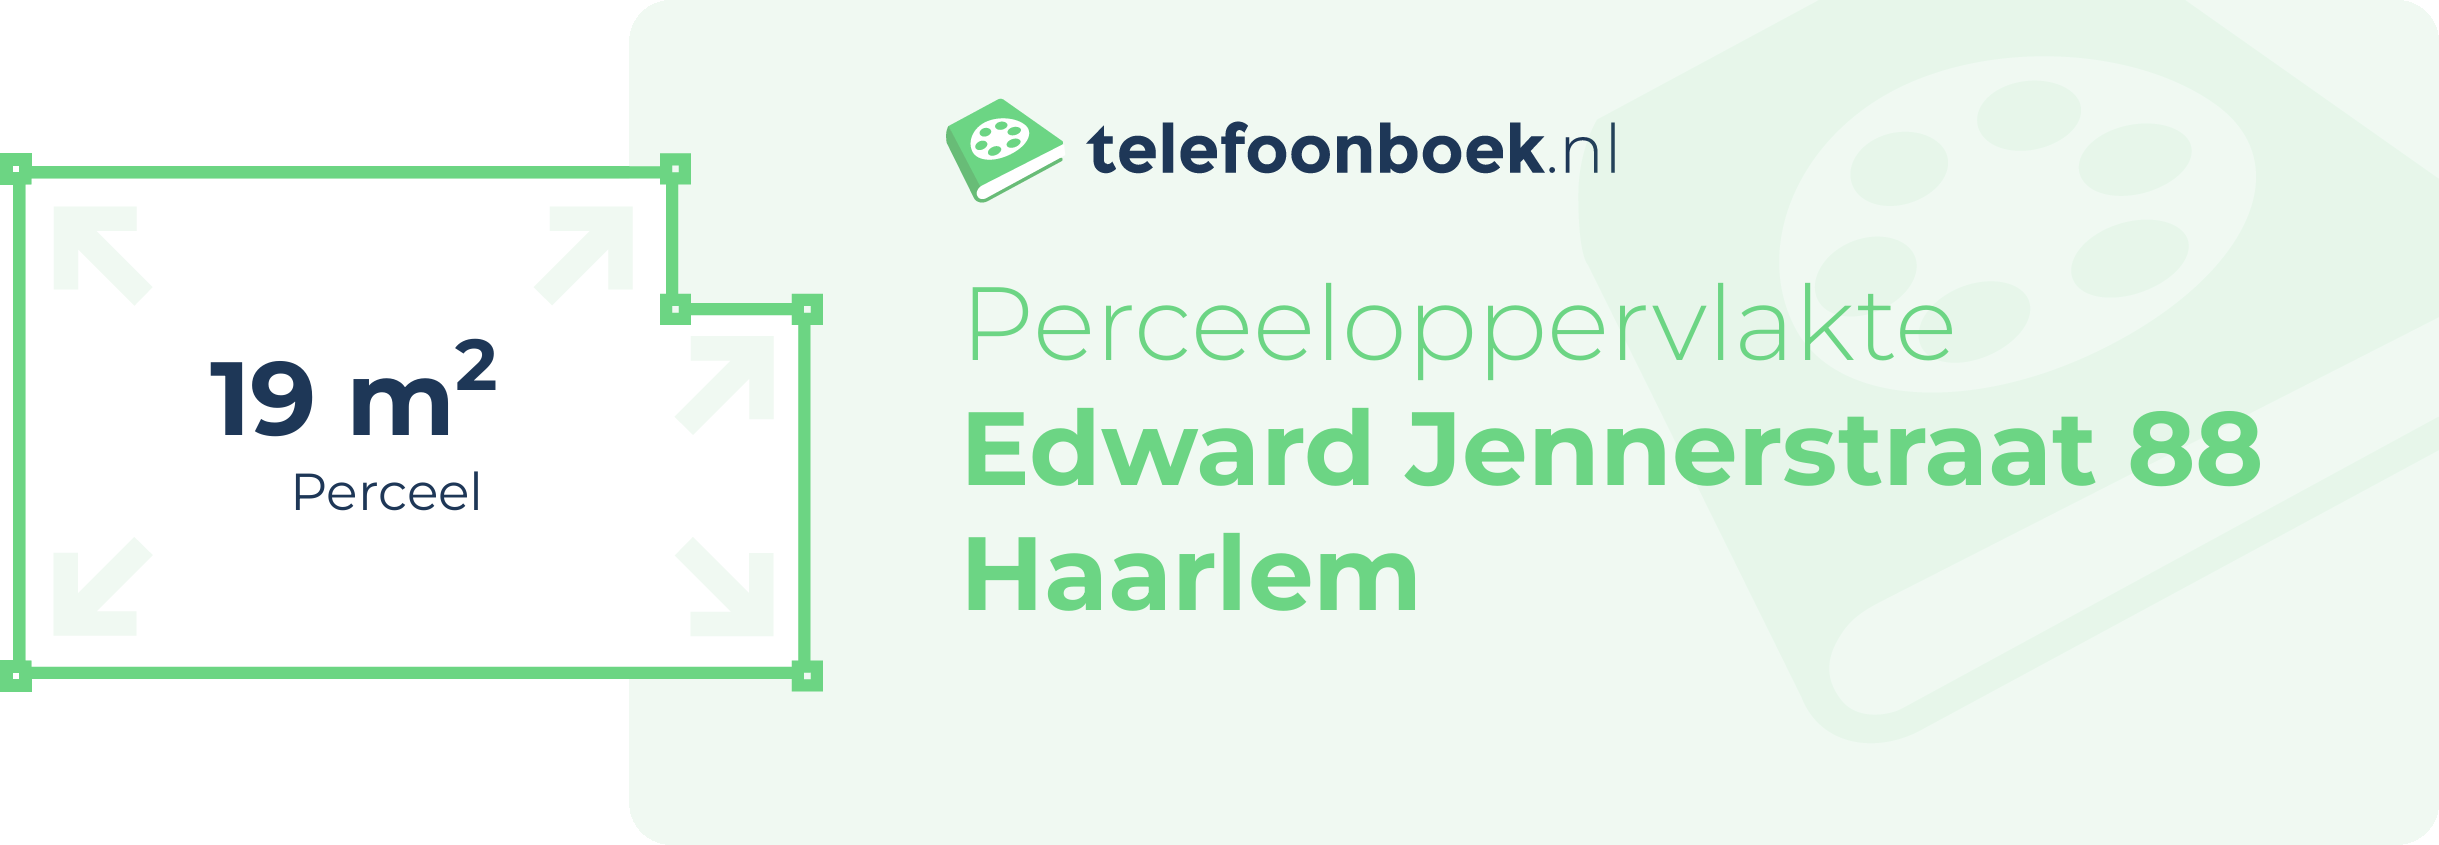 Perceeloppervlakte Edward Jennerstraat 88 Haarlem